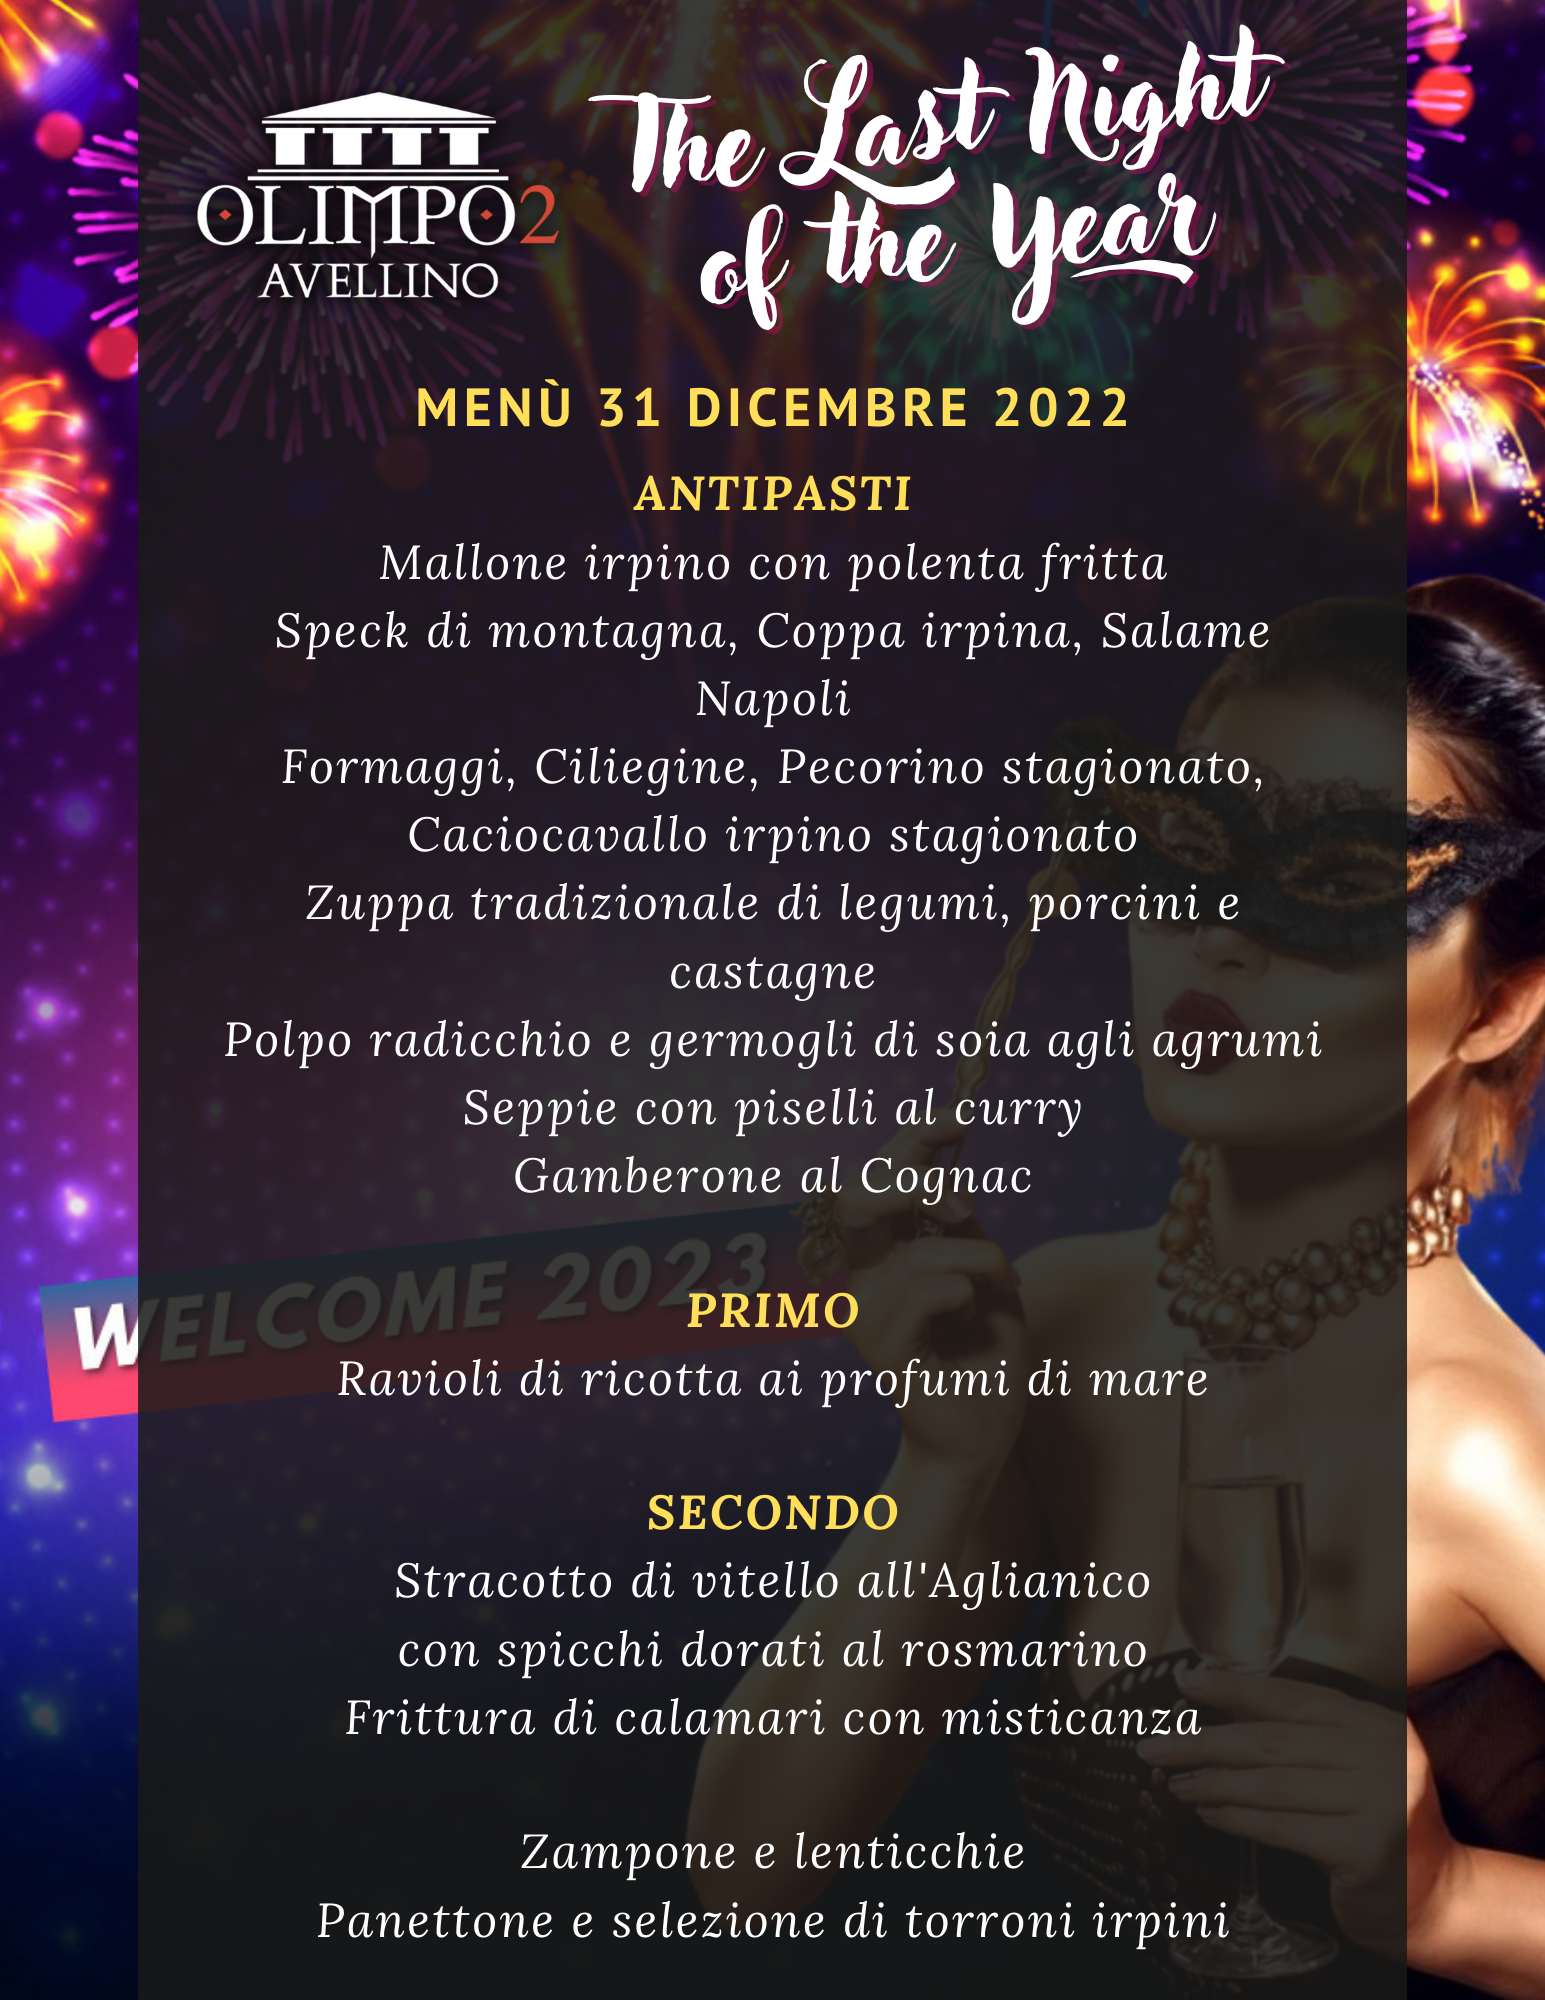 menu the last night of the year olimpo 2 avellino